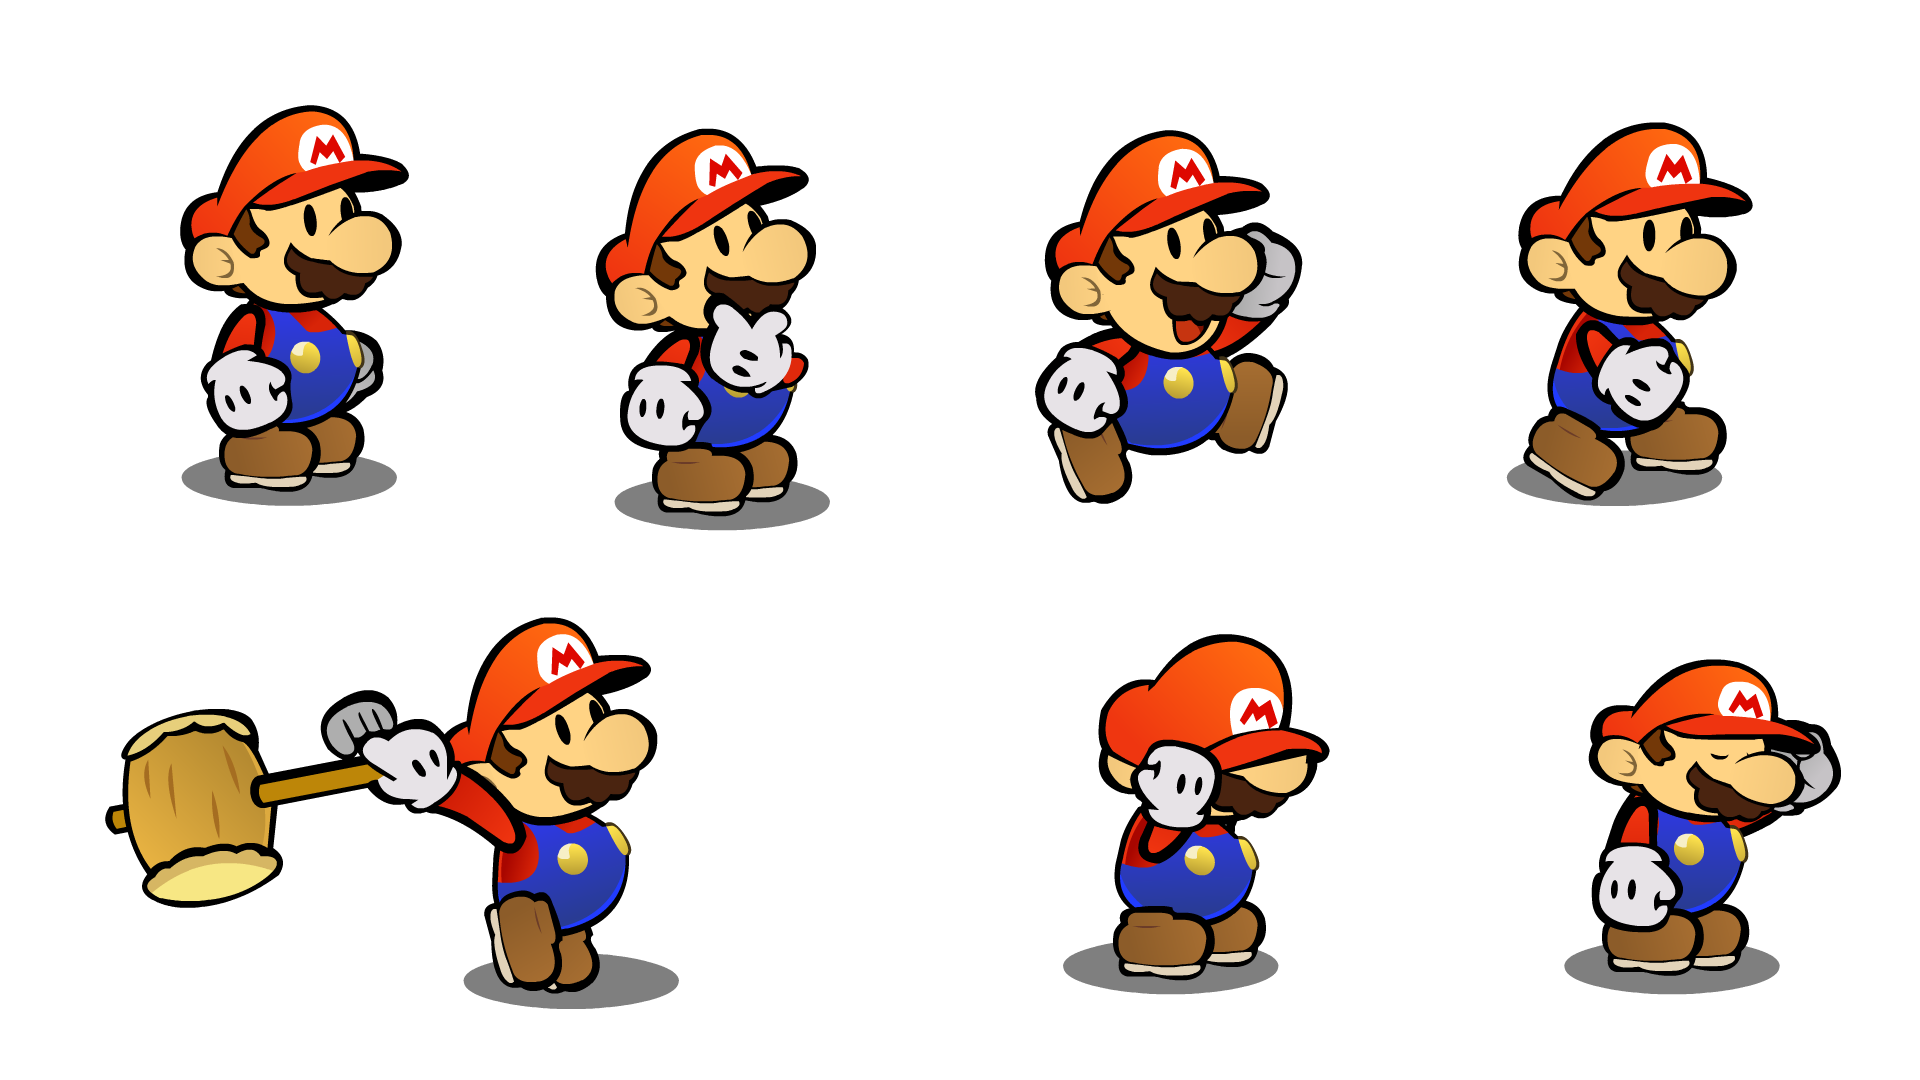 Mario bros sprites. Спрайт для игры 2д Марио. Марио игра 2д. Марио персонаж 2 д. Супер Марио спрайты.